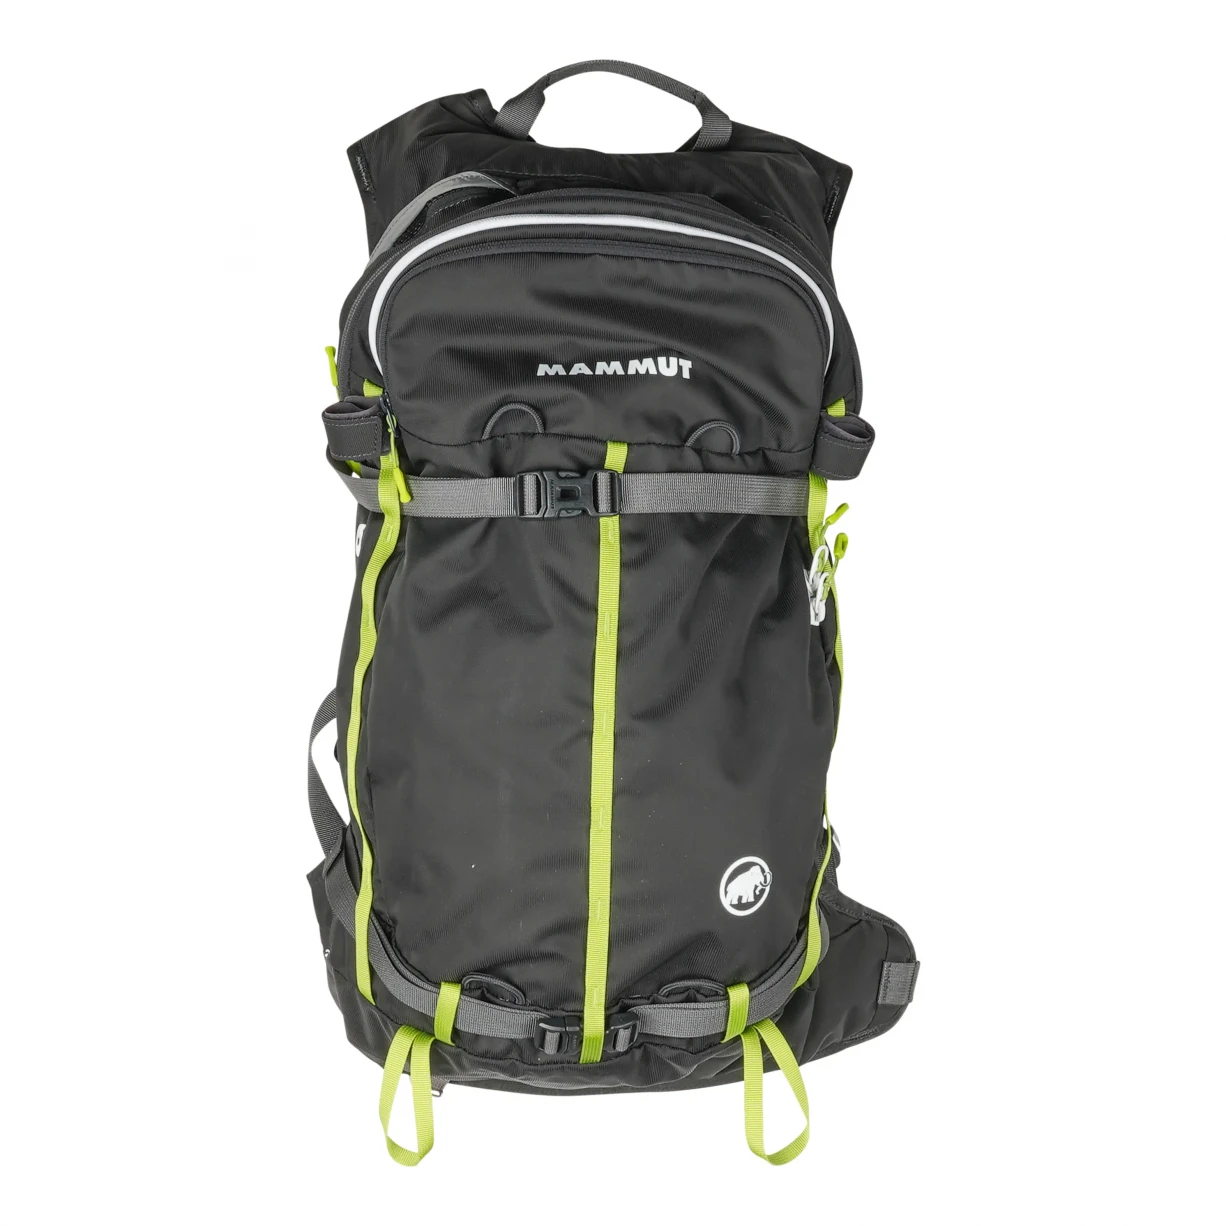 Item 964648 - Mammut Flip Removable Airbag 3.0 22L Backpack